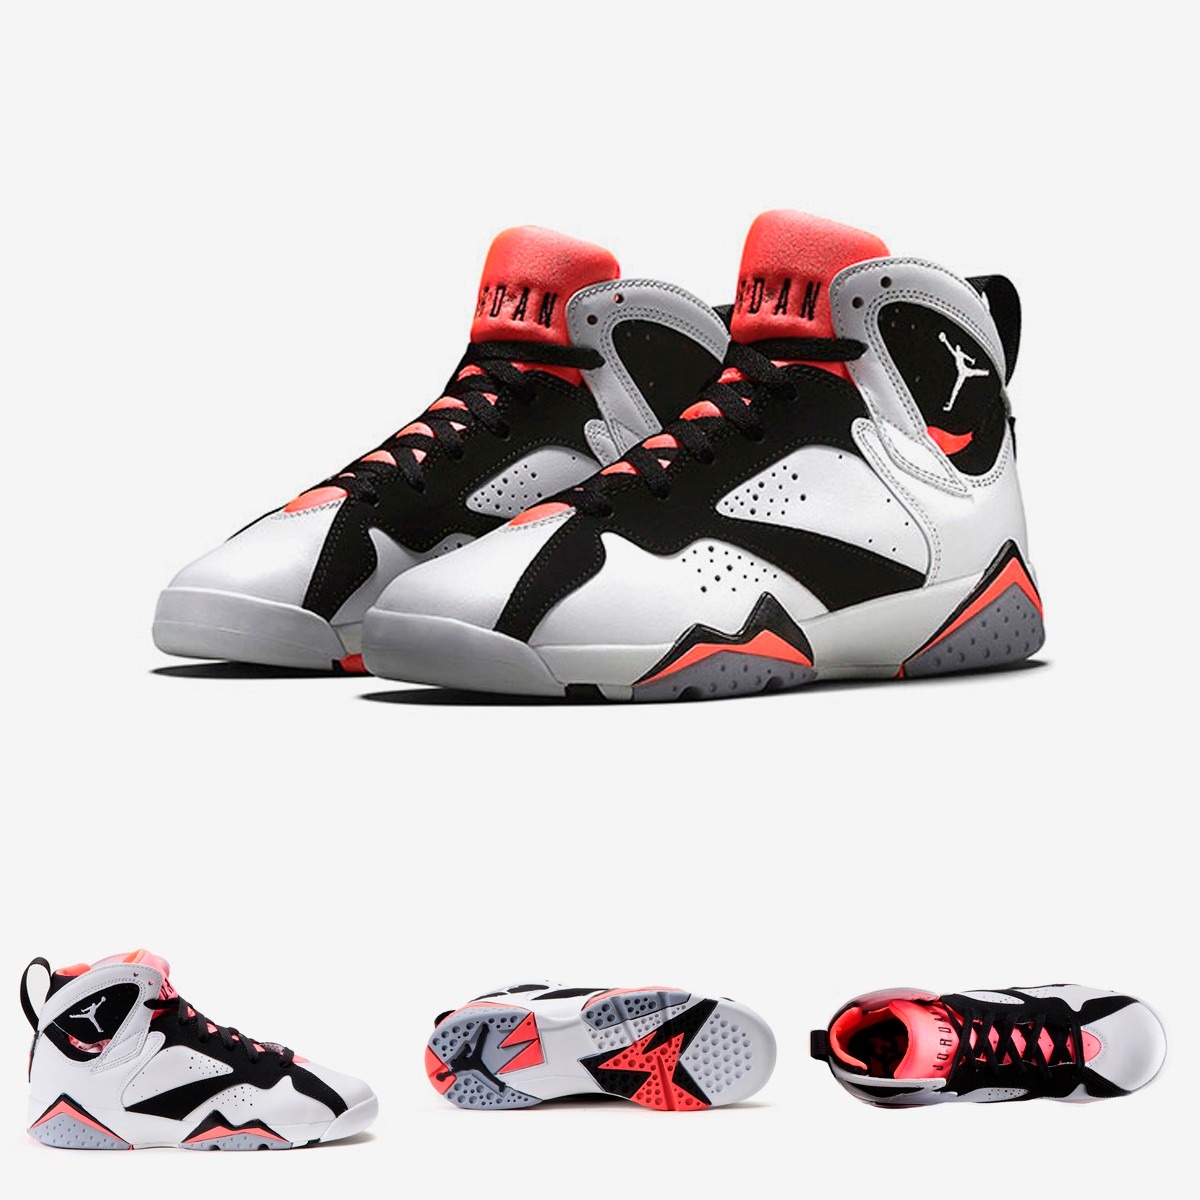 Zapatillas Nike Air Jordan Retro 7 | Gs 100% Original - S/ 629,00 en  Mercado Libre